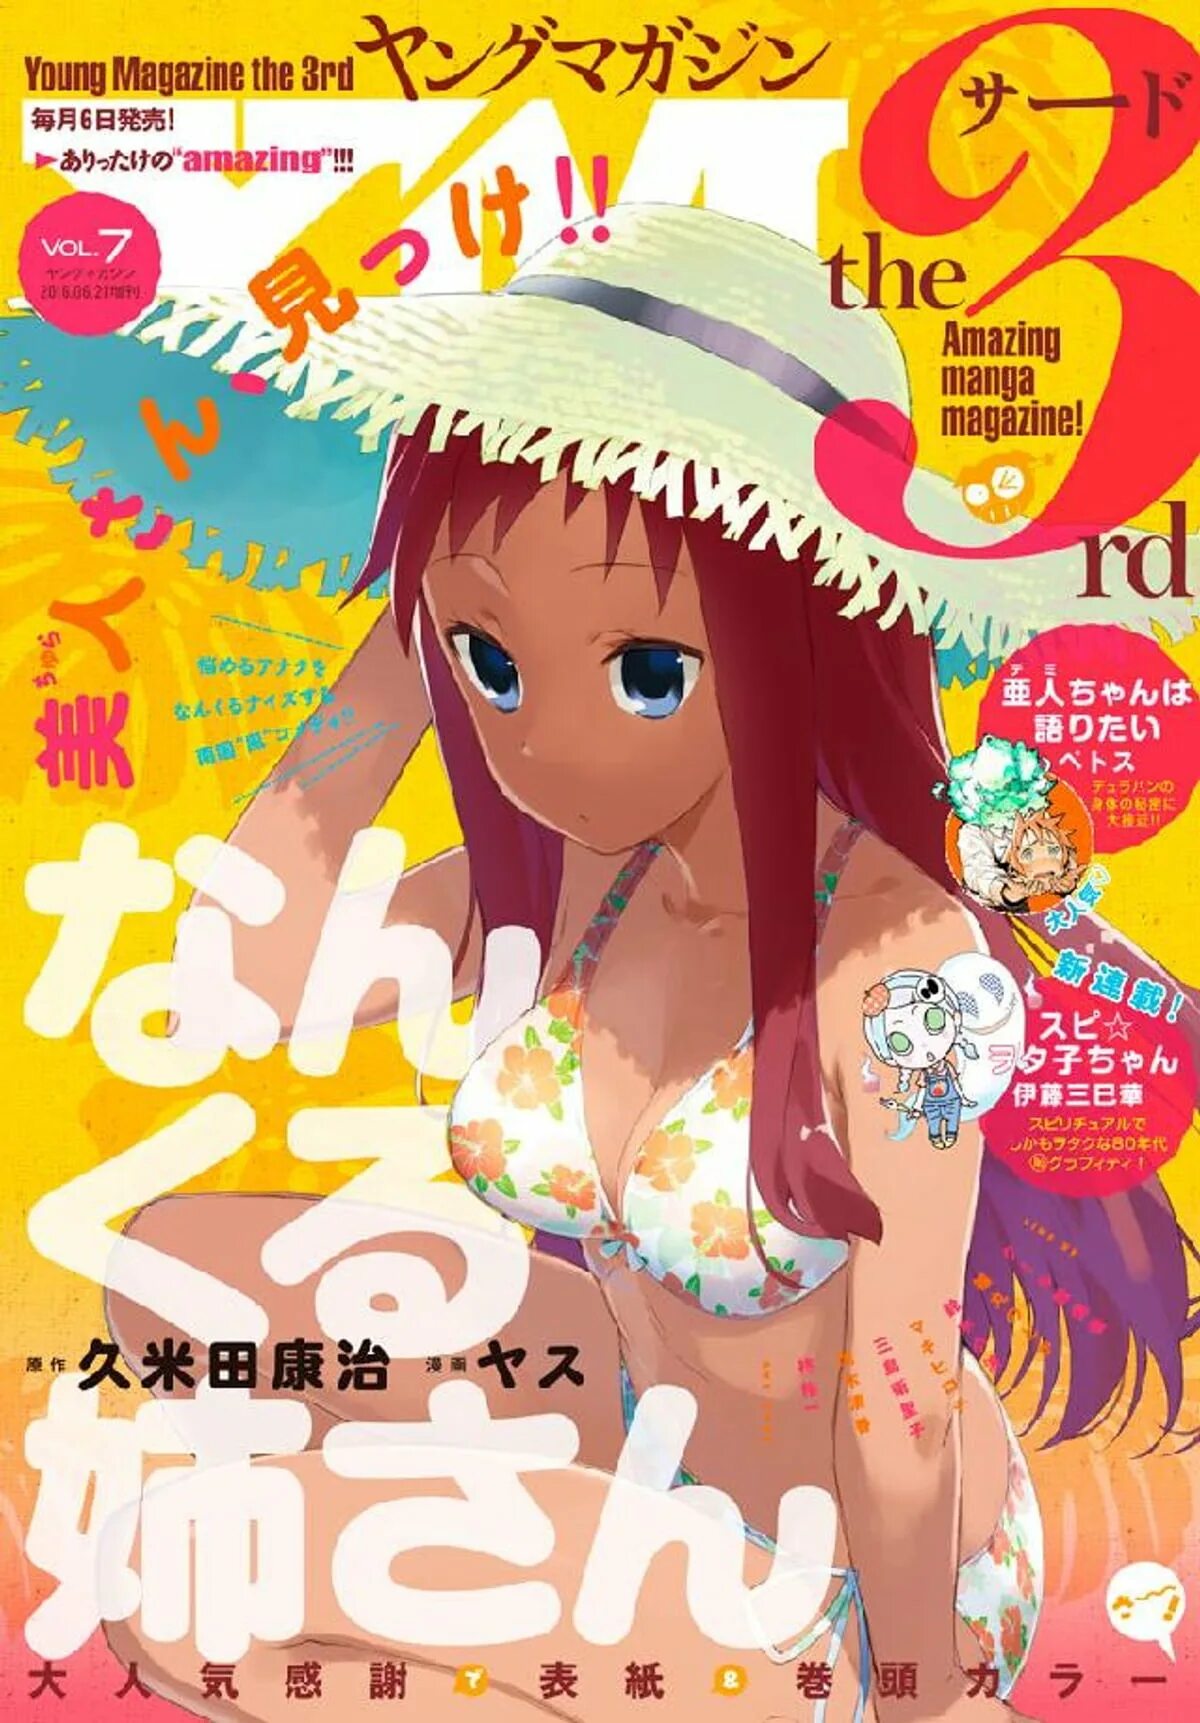 Young magazine. Manga Magazine.